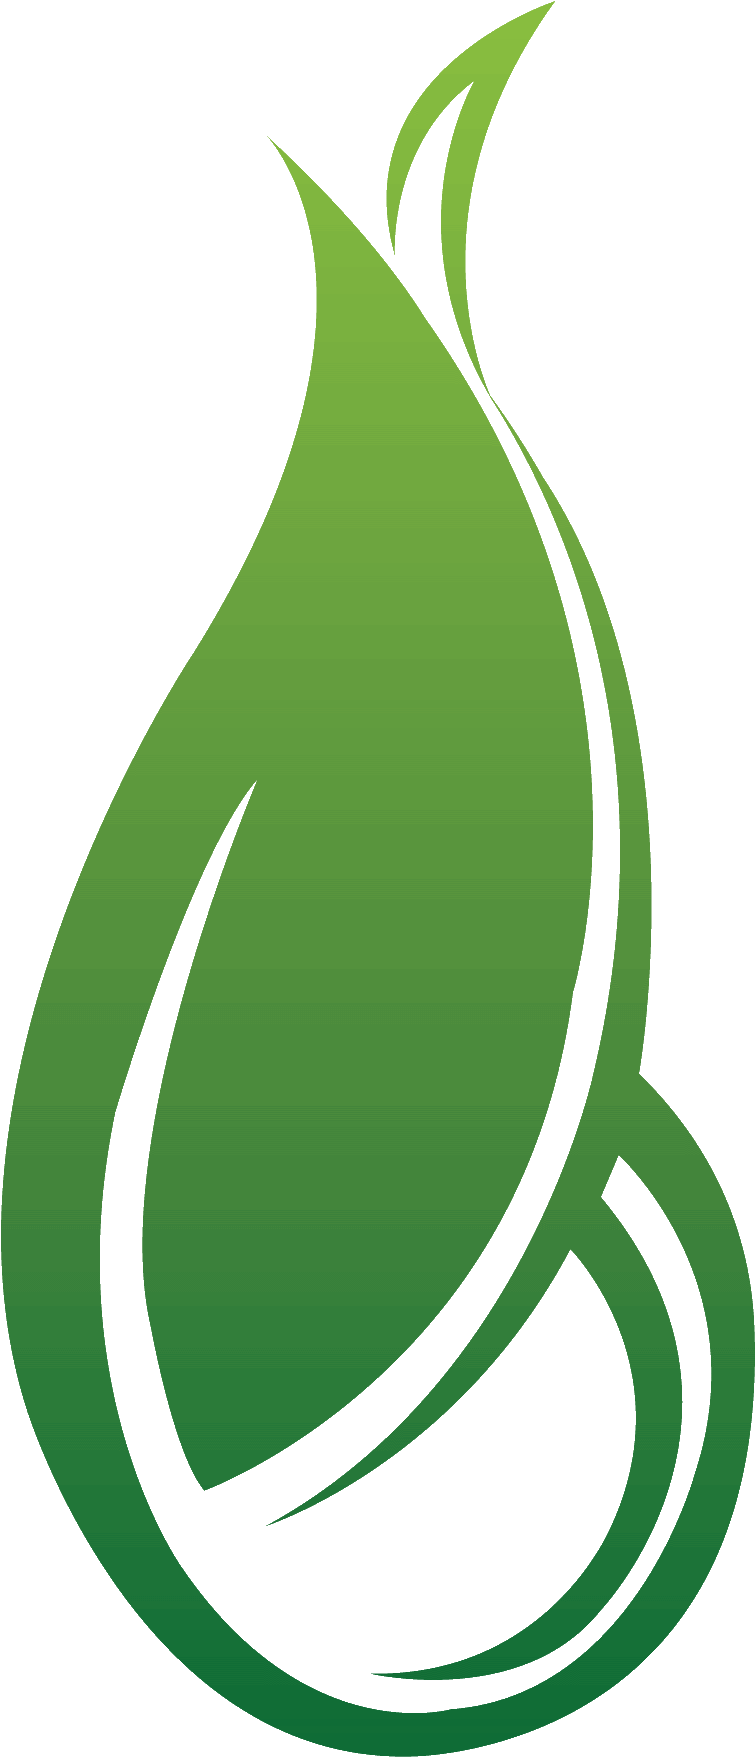 Benzer Crop Science - Crop Science Logo (1108x1790)